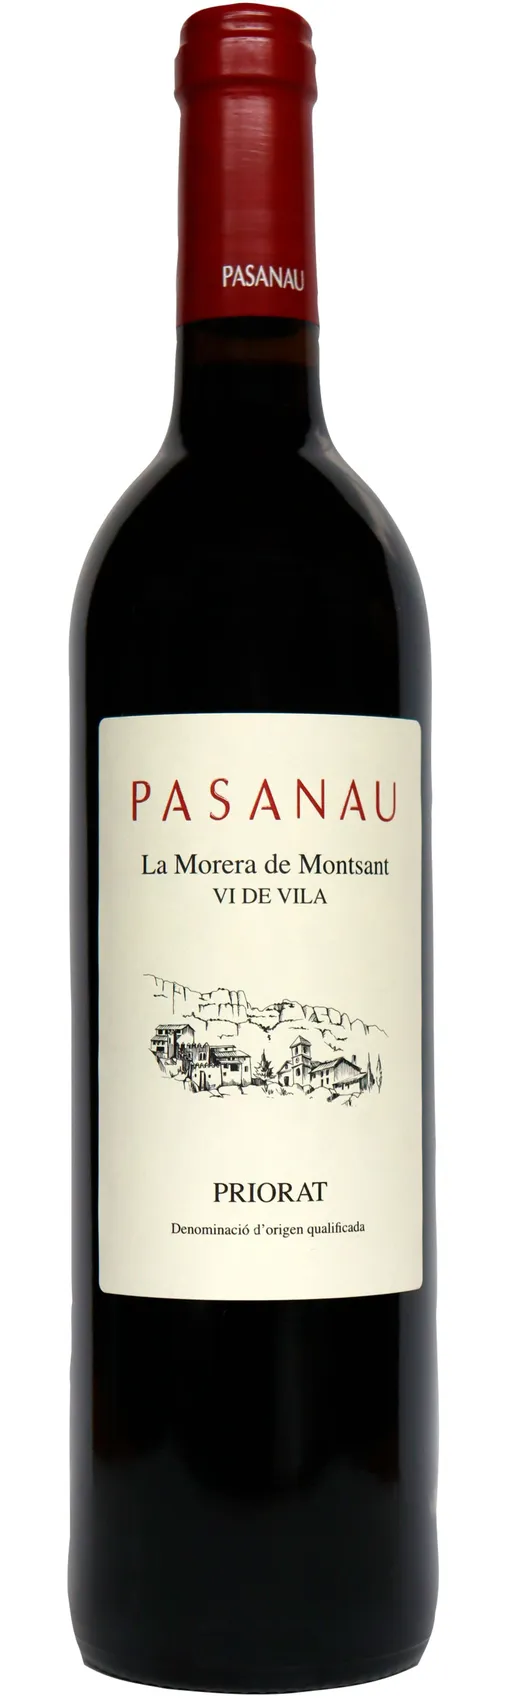 PASANAU GERMANS SOCIEDAD LIMITADA. PASANAU, Vi de Vila La Morera de Montsant, Tinto, 2019, Priorat / Priorato. Imagen de botella